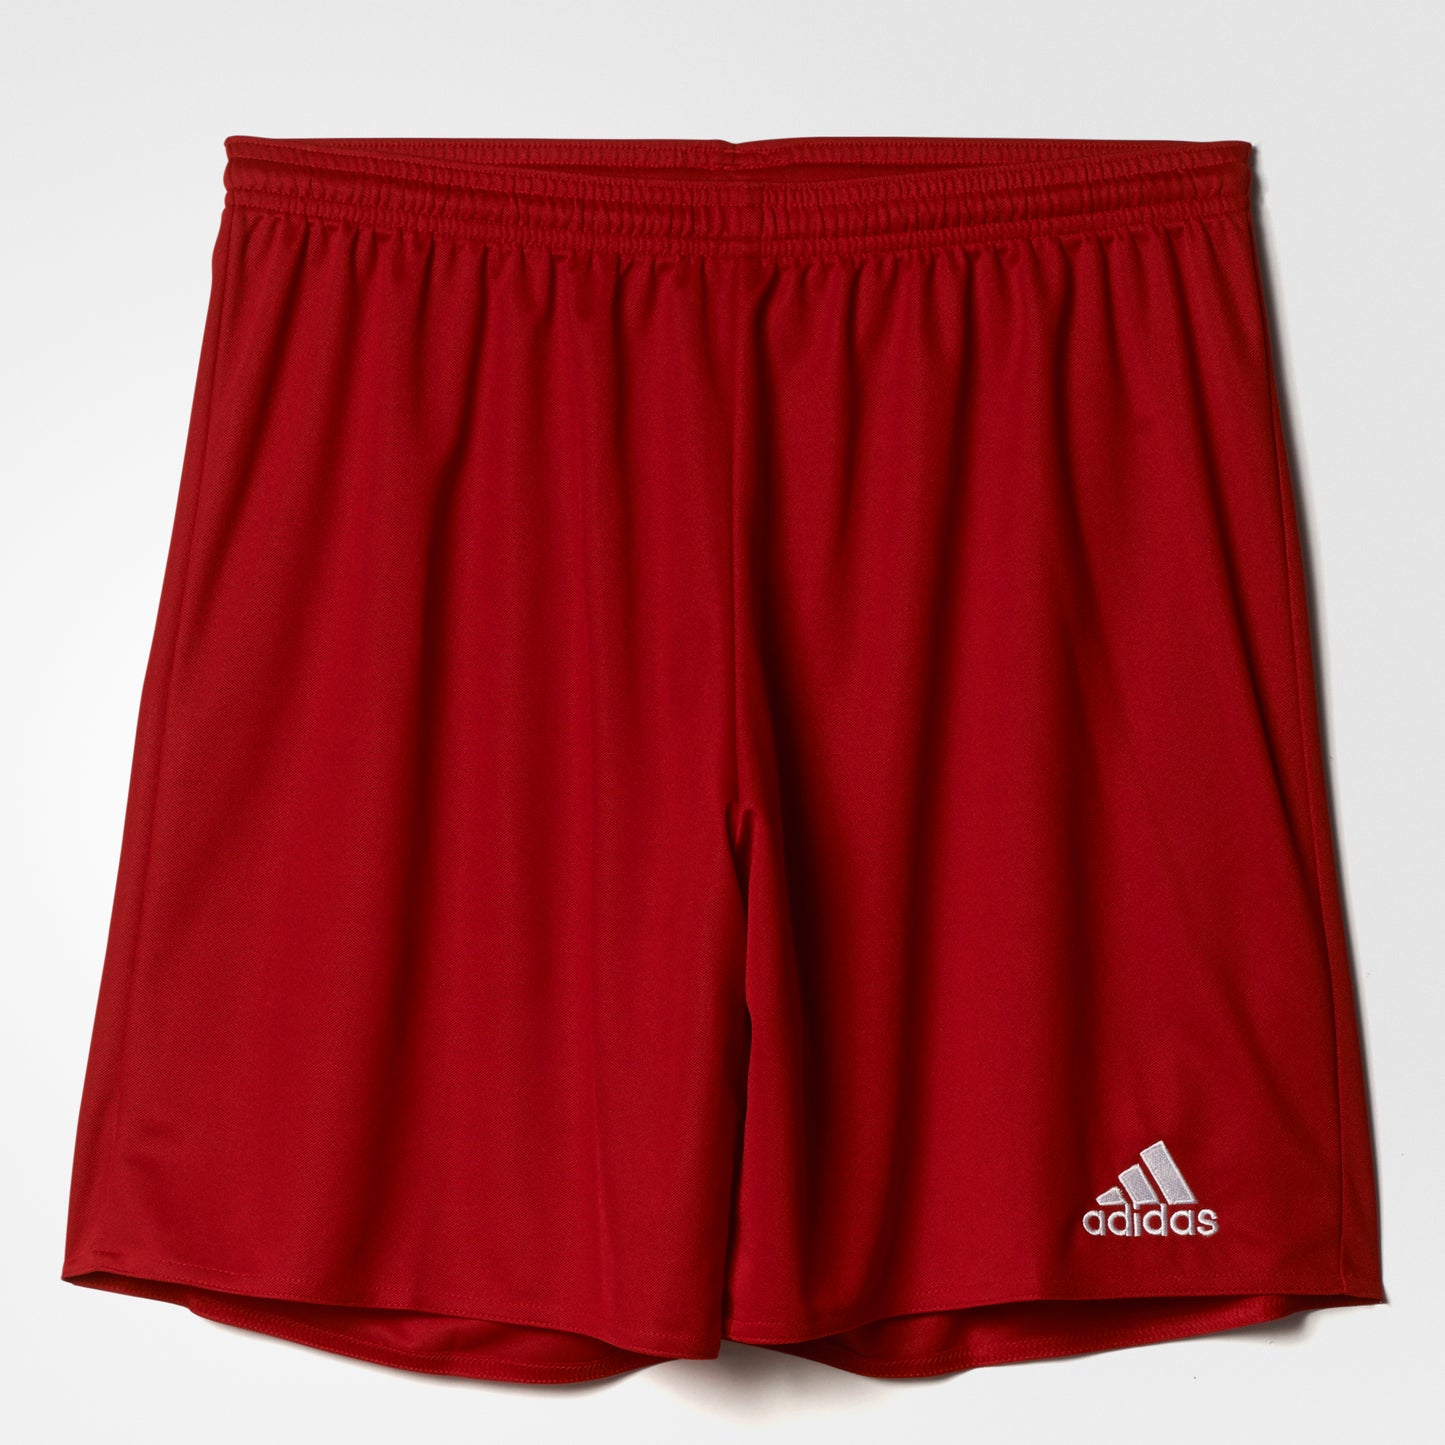 adidas PARMA 16 Shorts | Power Red | Men's